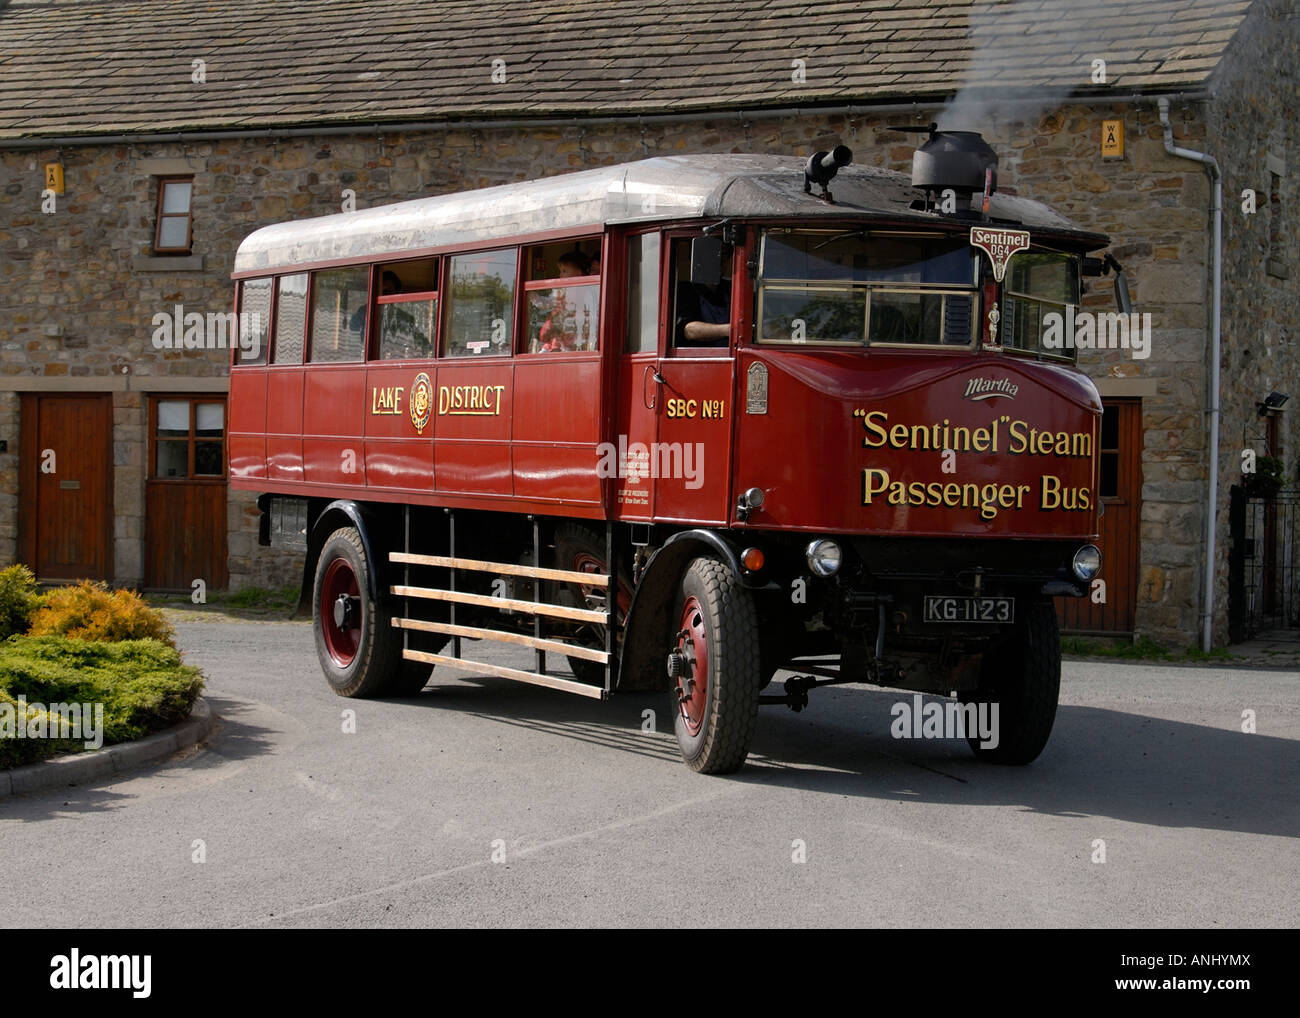 Sentinel-Dampf-Passagier-Bus, Lancashire, England Stockfoto